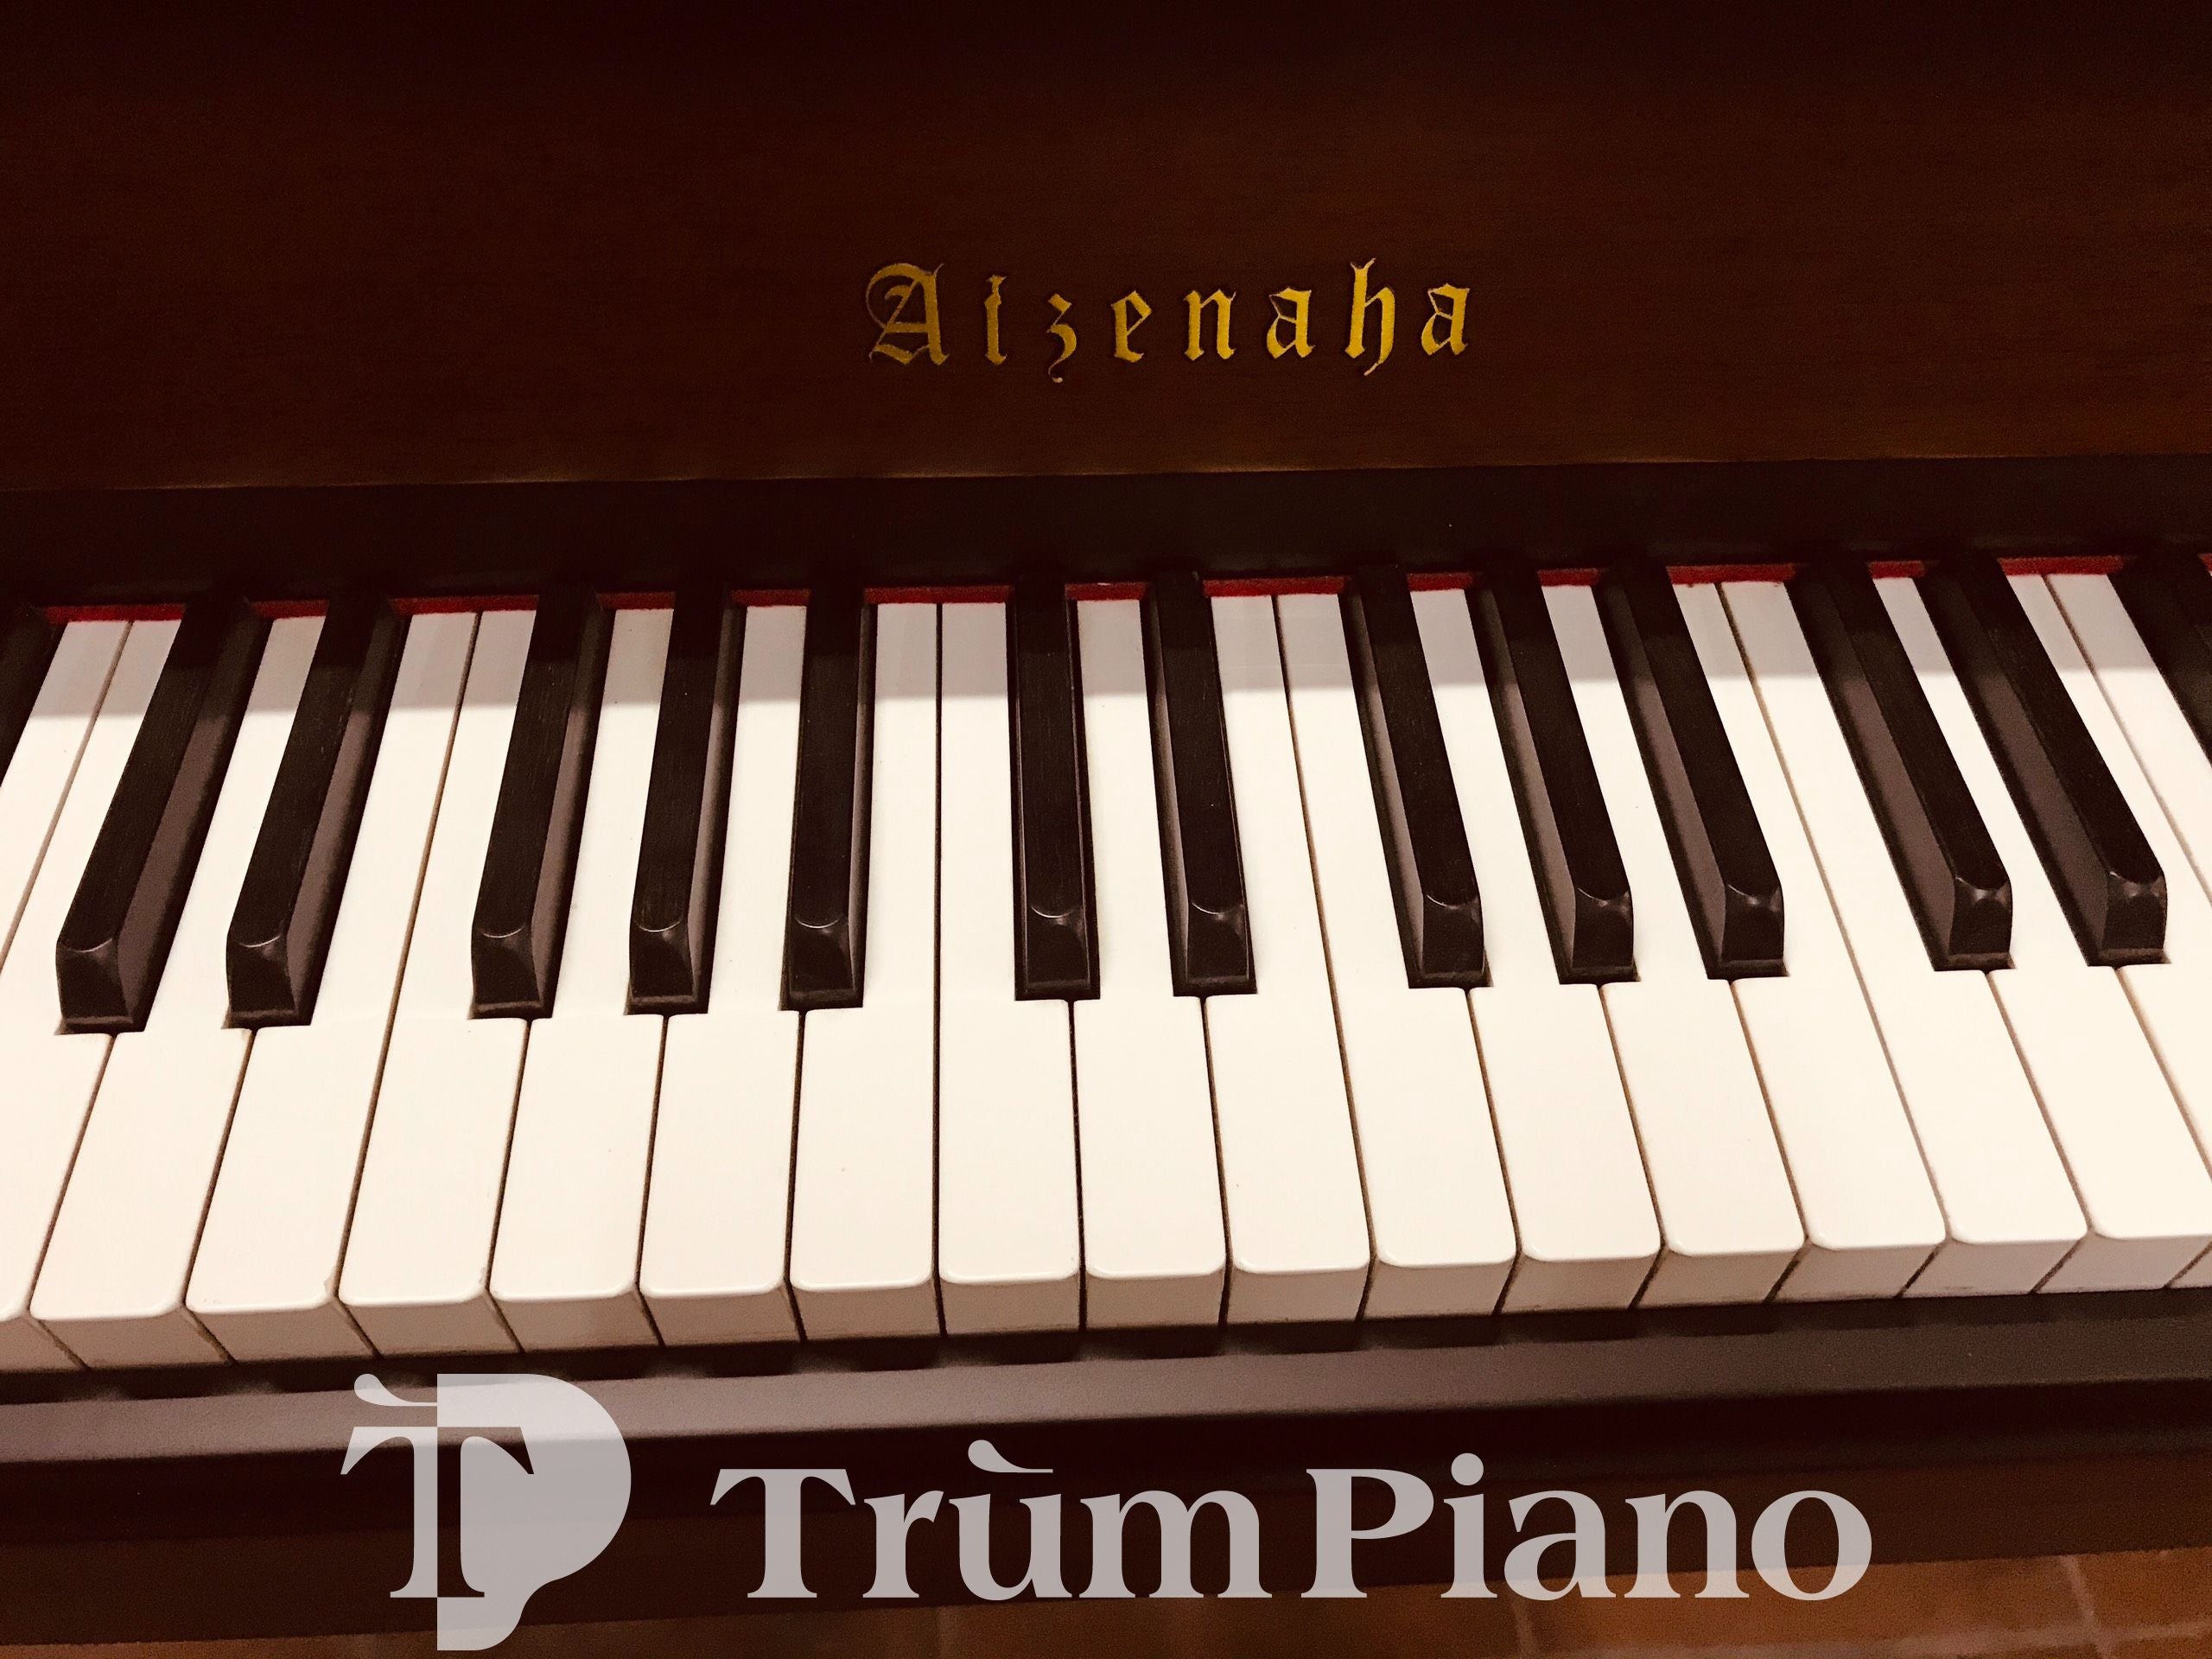 Đàn Piano Aizenaha W70TS